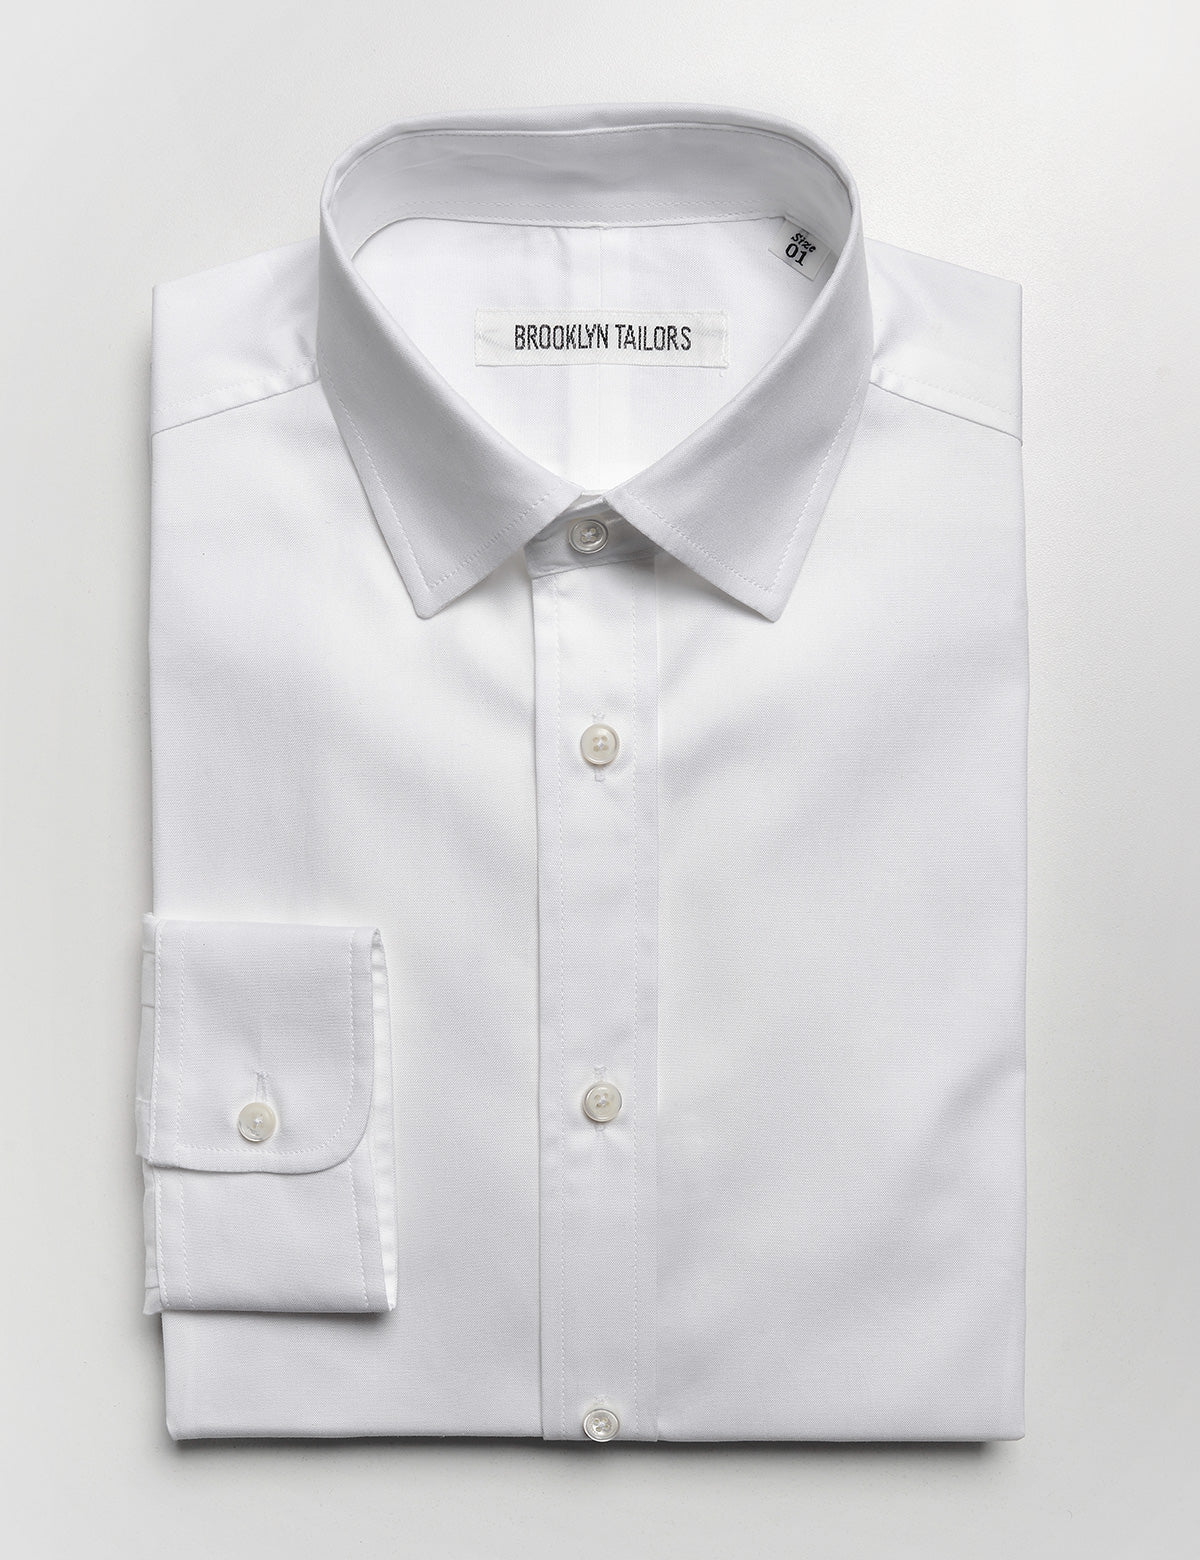 Brooklyn Tailors BKT20 Slim Dress Shirt in Pinpoint Oxford - White folded flat shot